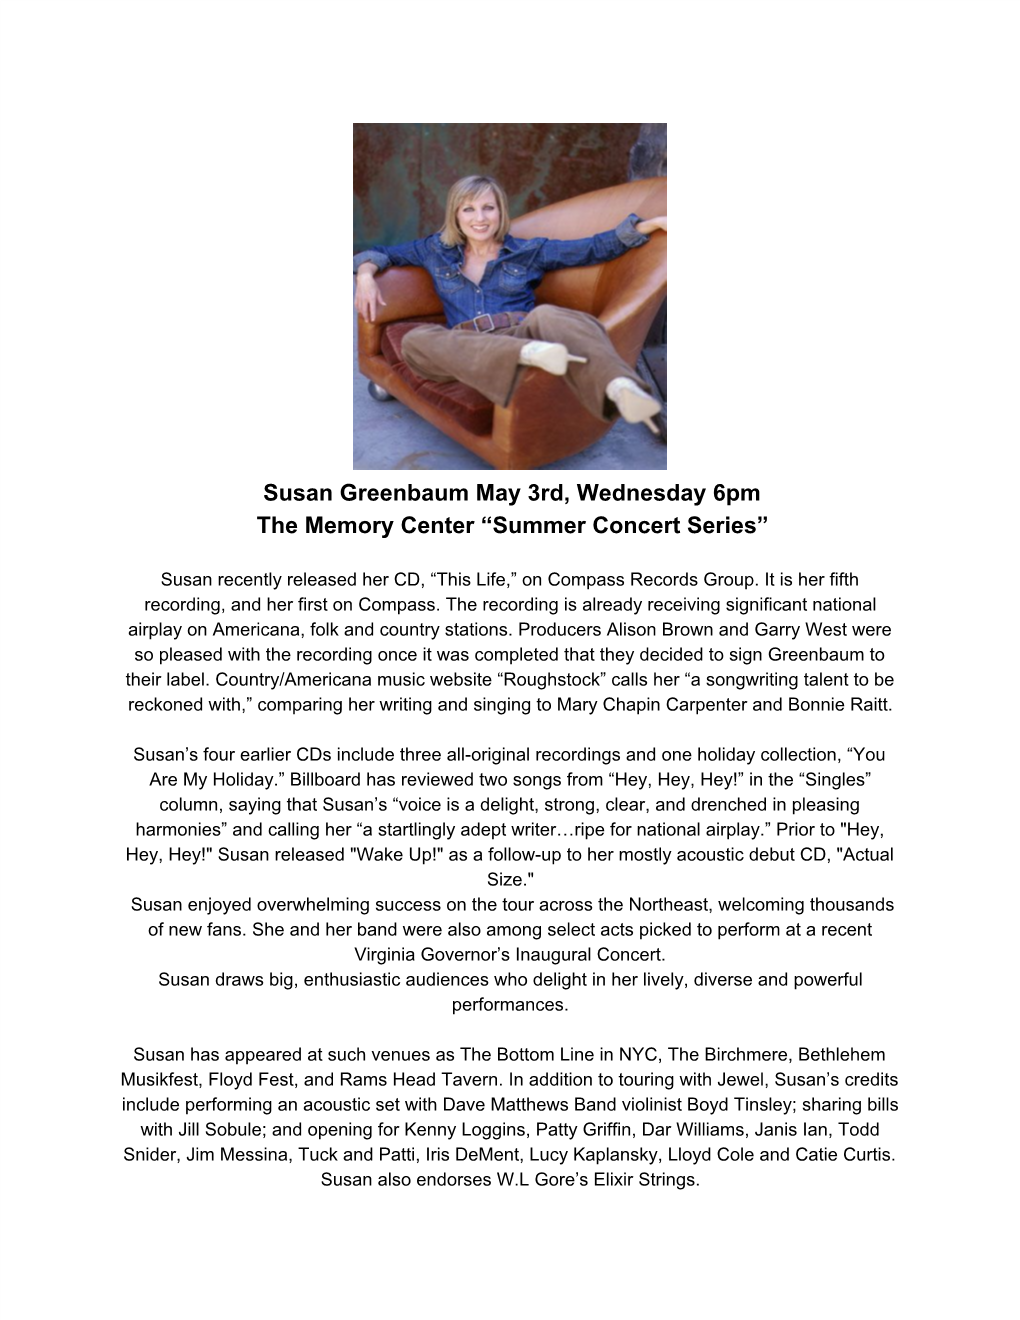 ​Susan Greenbaum May 3Rd, Wednesday 6Pm the Memory Center